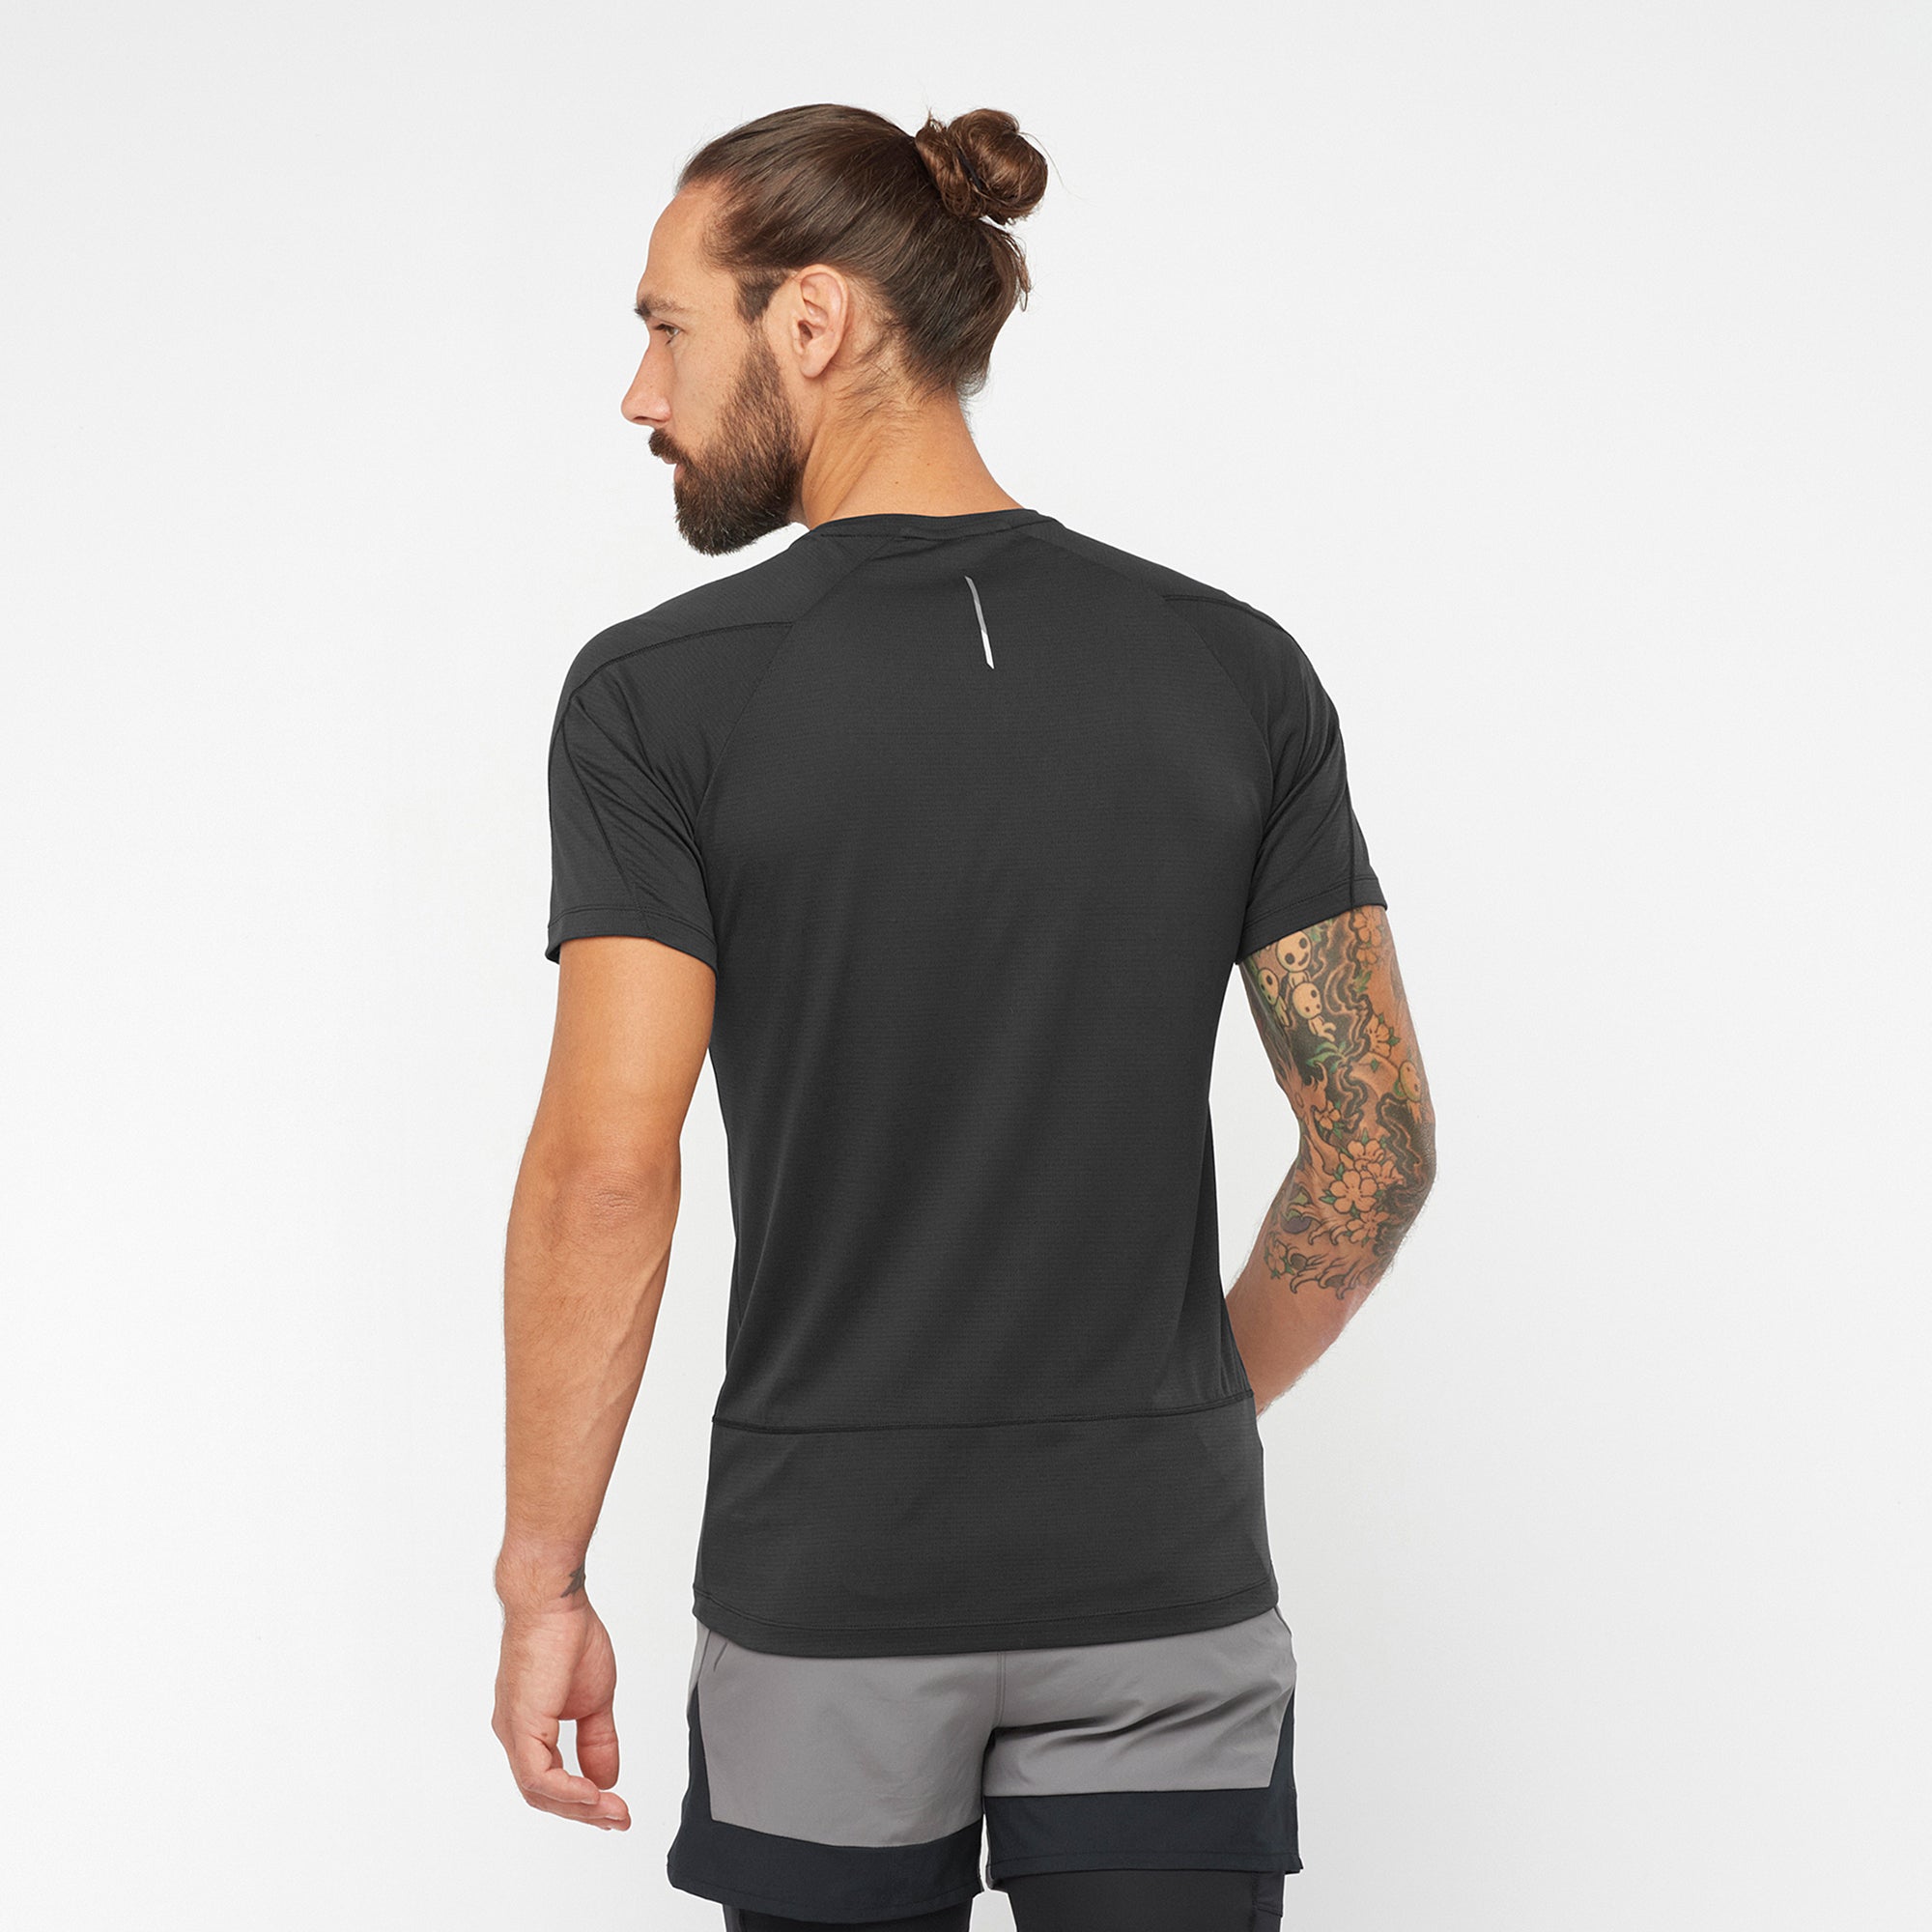 Cross Run - Men's Long Sleeve T-Shirt